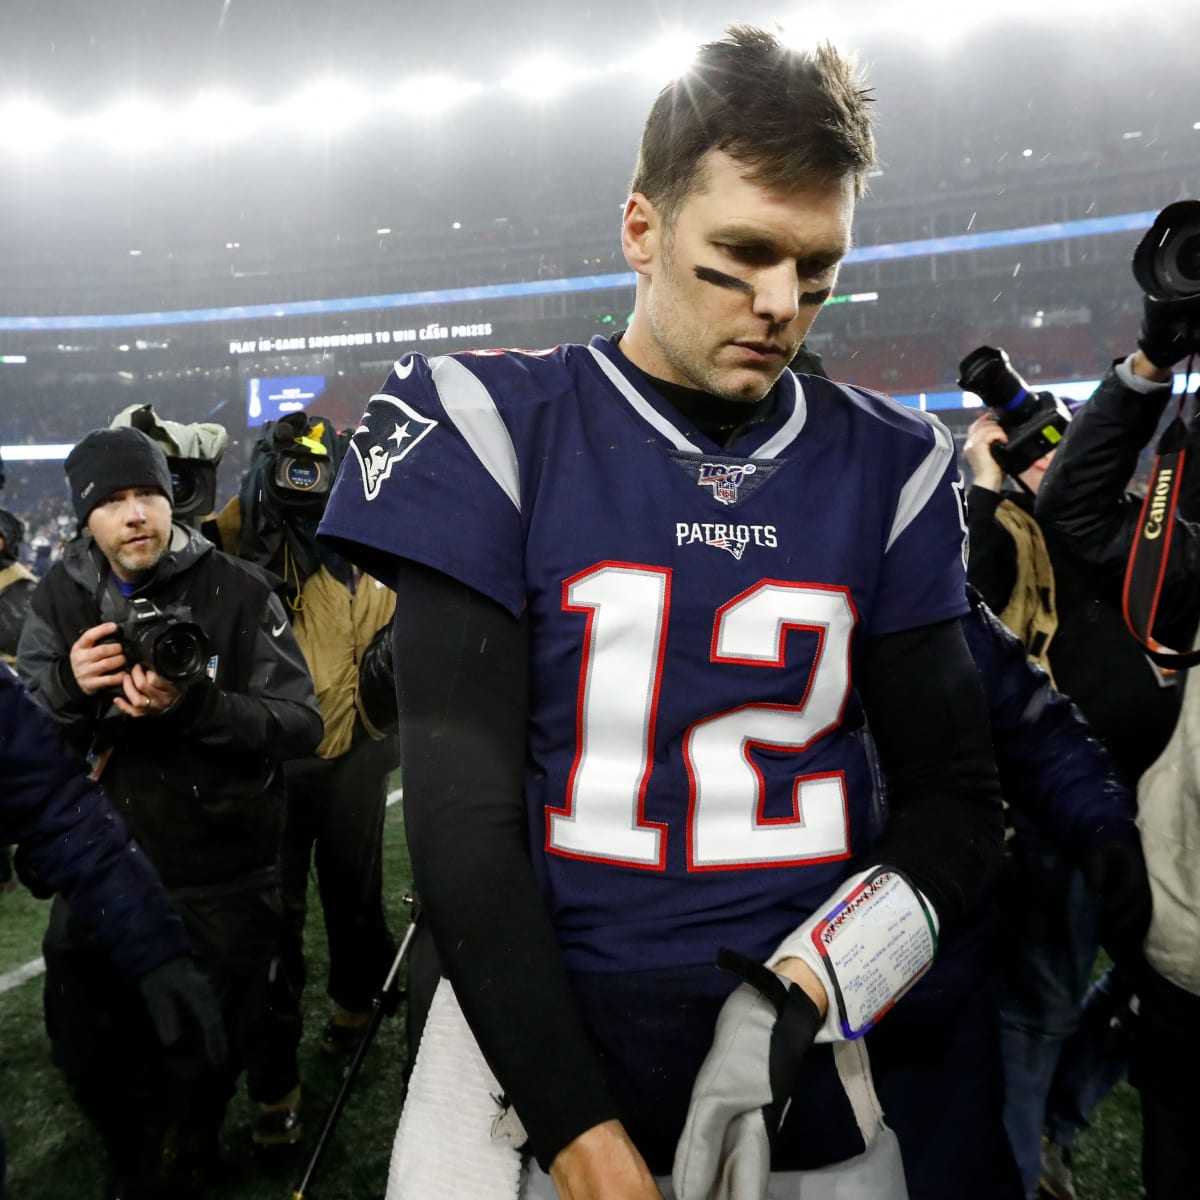 Tom Brady posts cryptic Instagram photo as NFL free agency looms